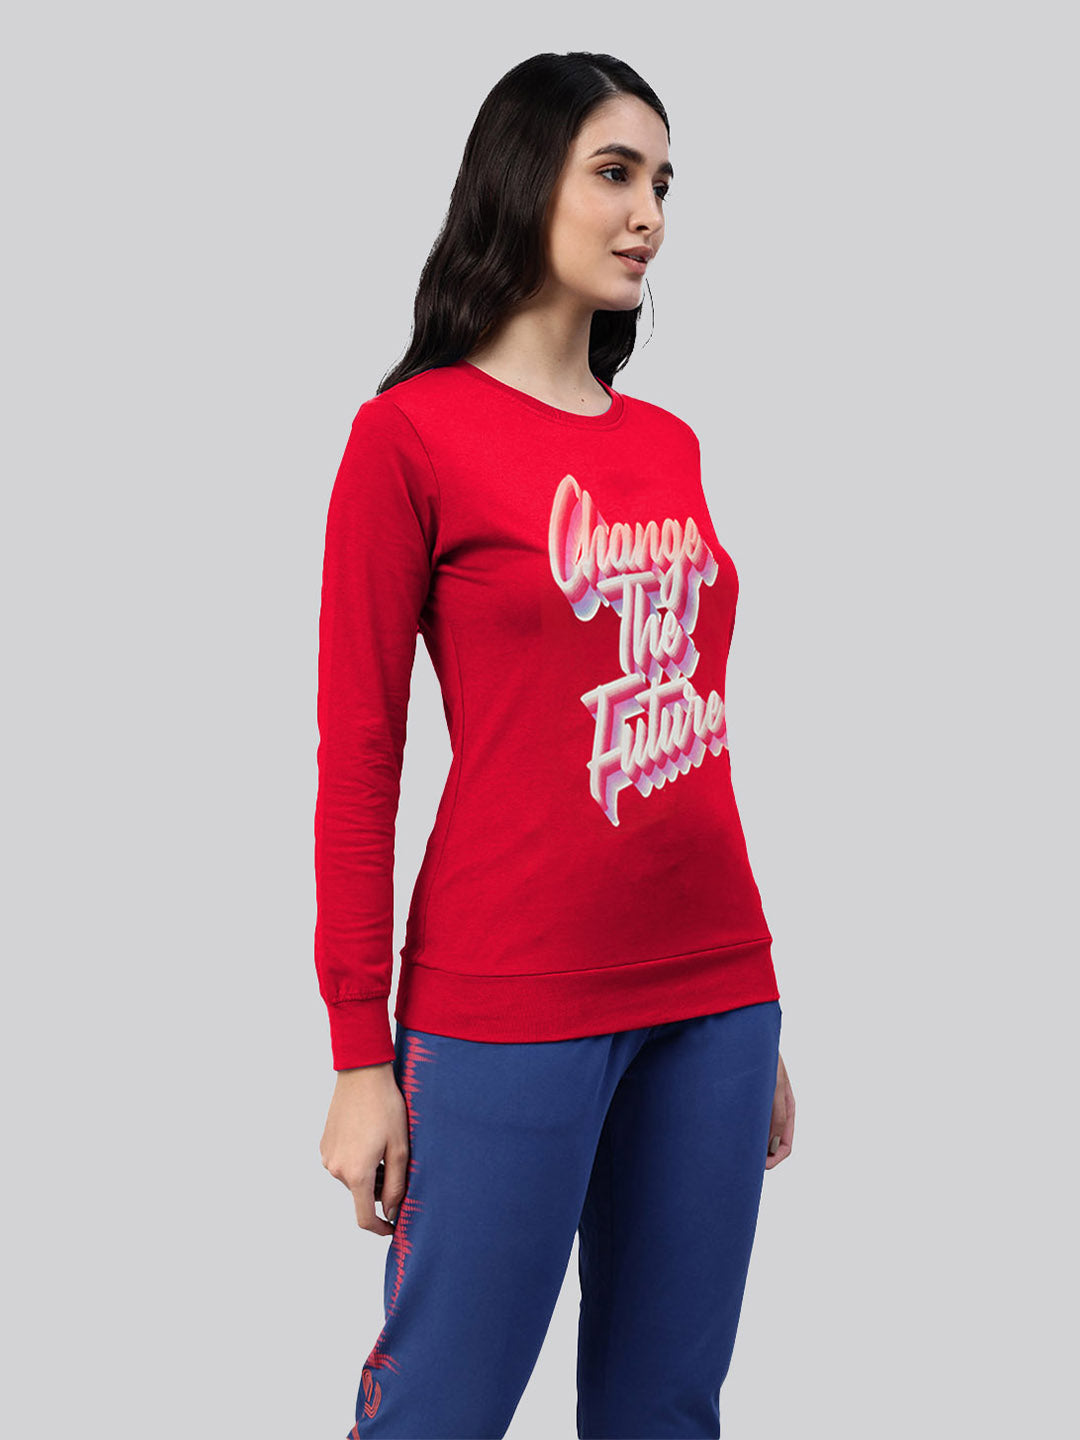 Red printed round neck ladies t - shirt